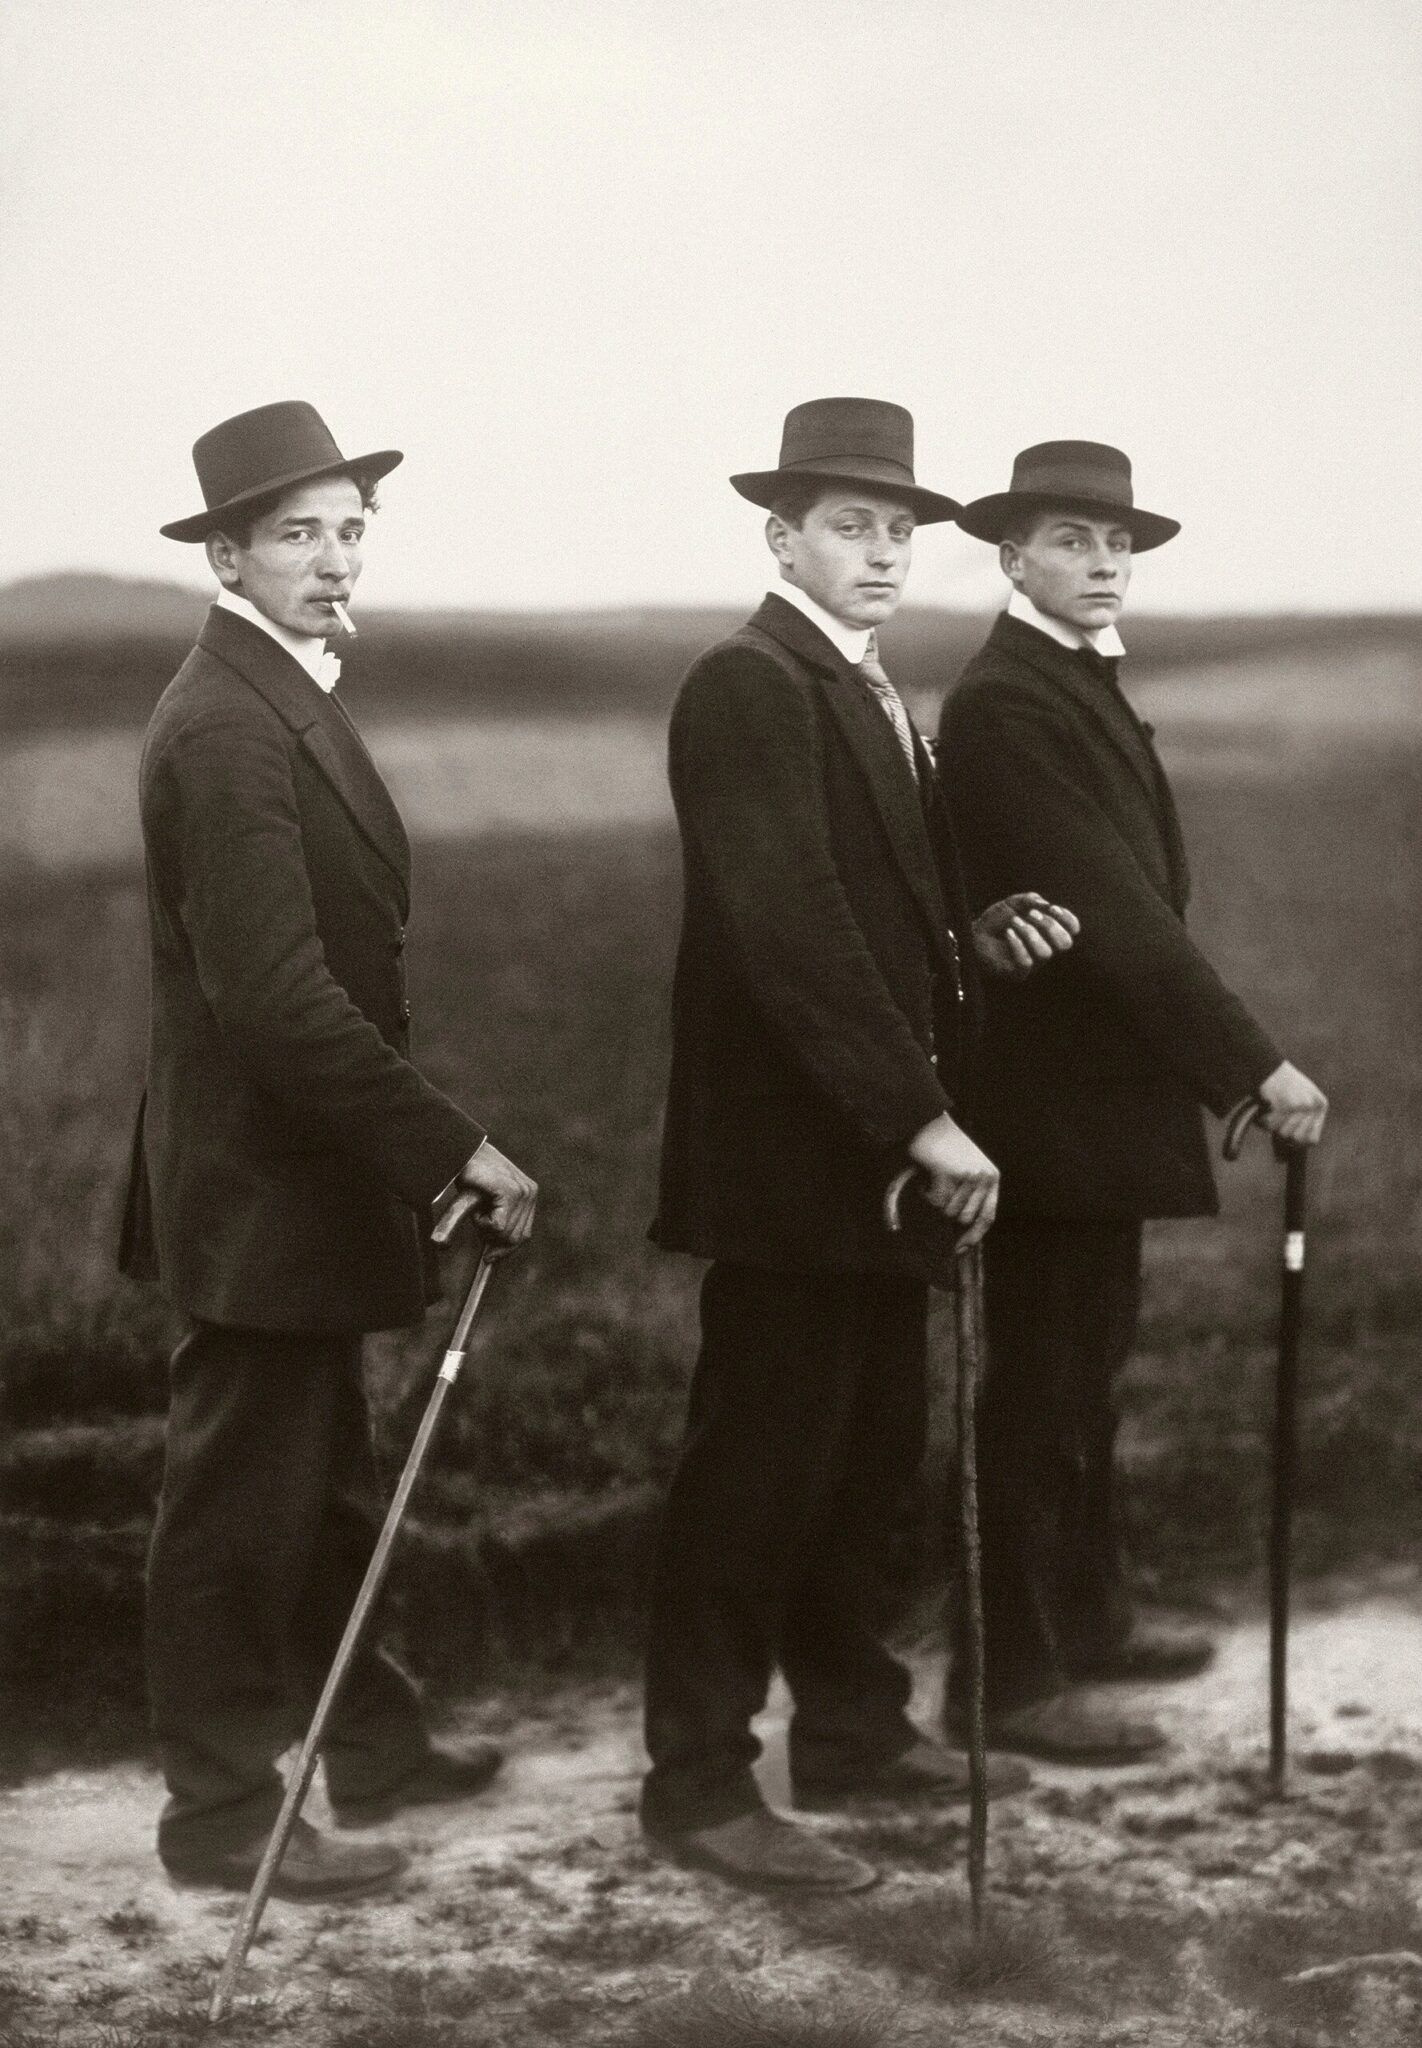 August Sander. Young farmers, 1914. Bernal Espacio